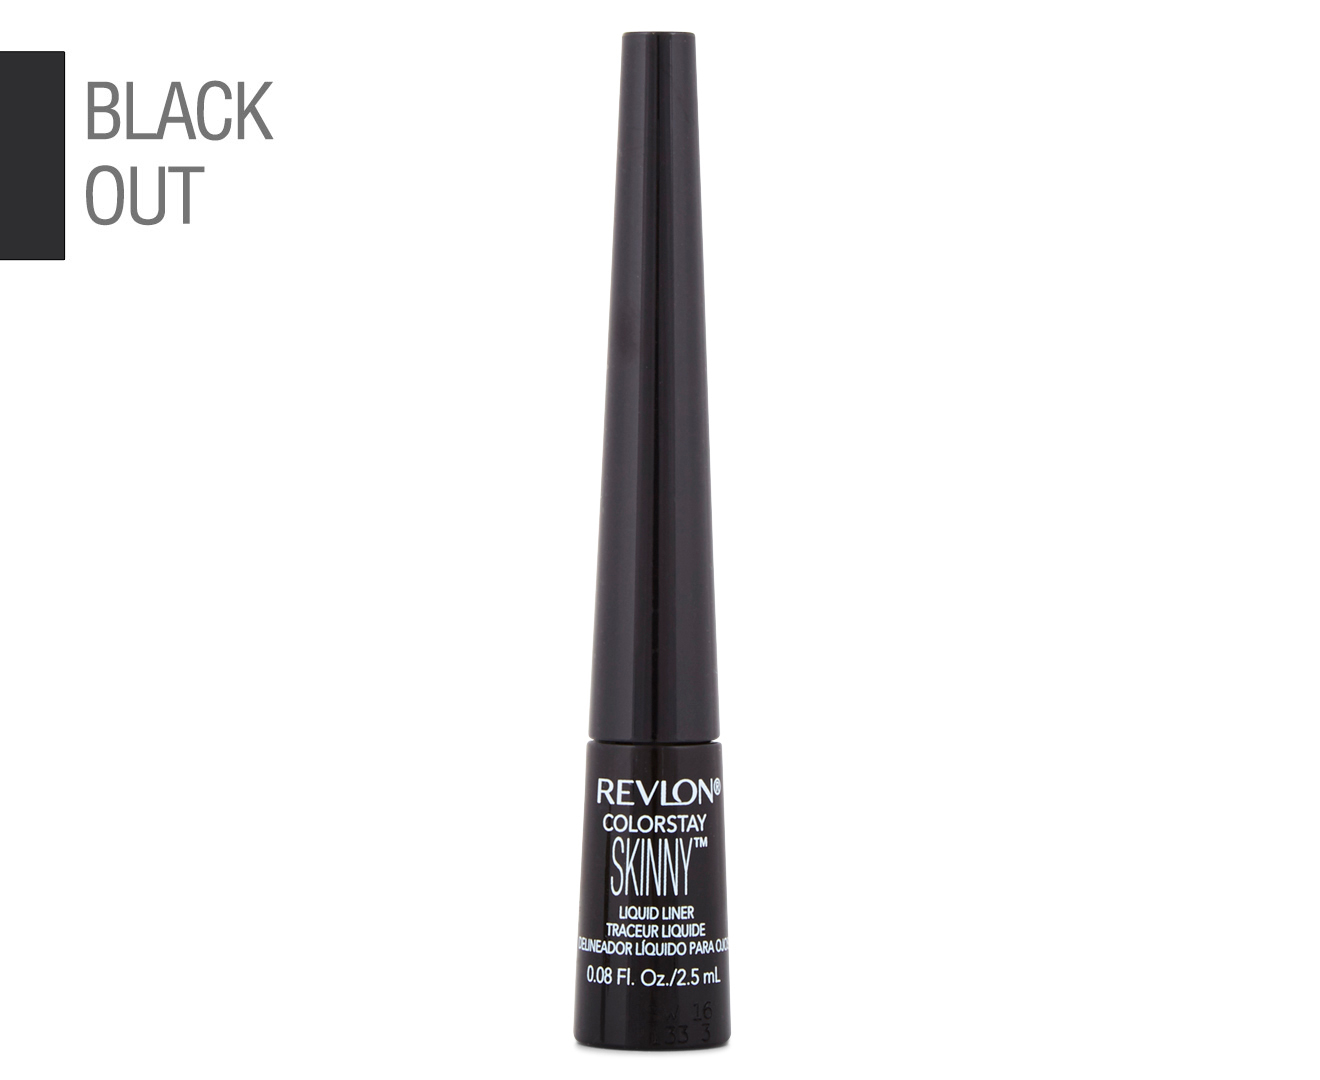 Revlon ColorStay Skinny Liquid Liner - #301 Black Out